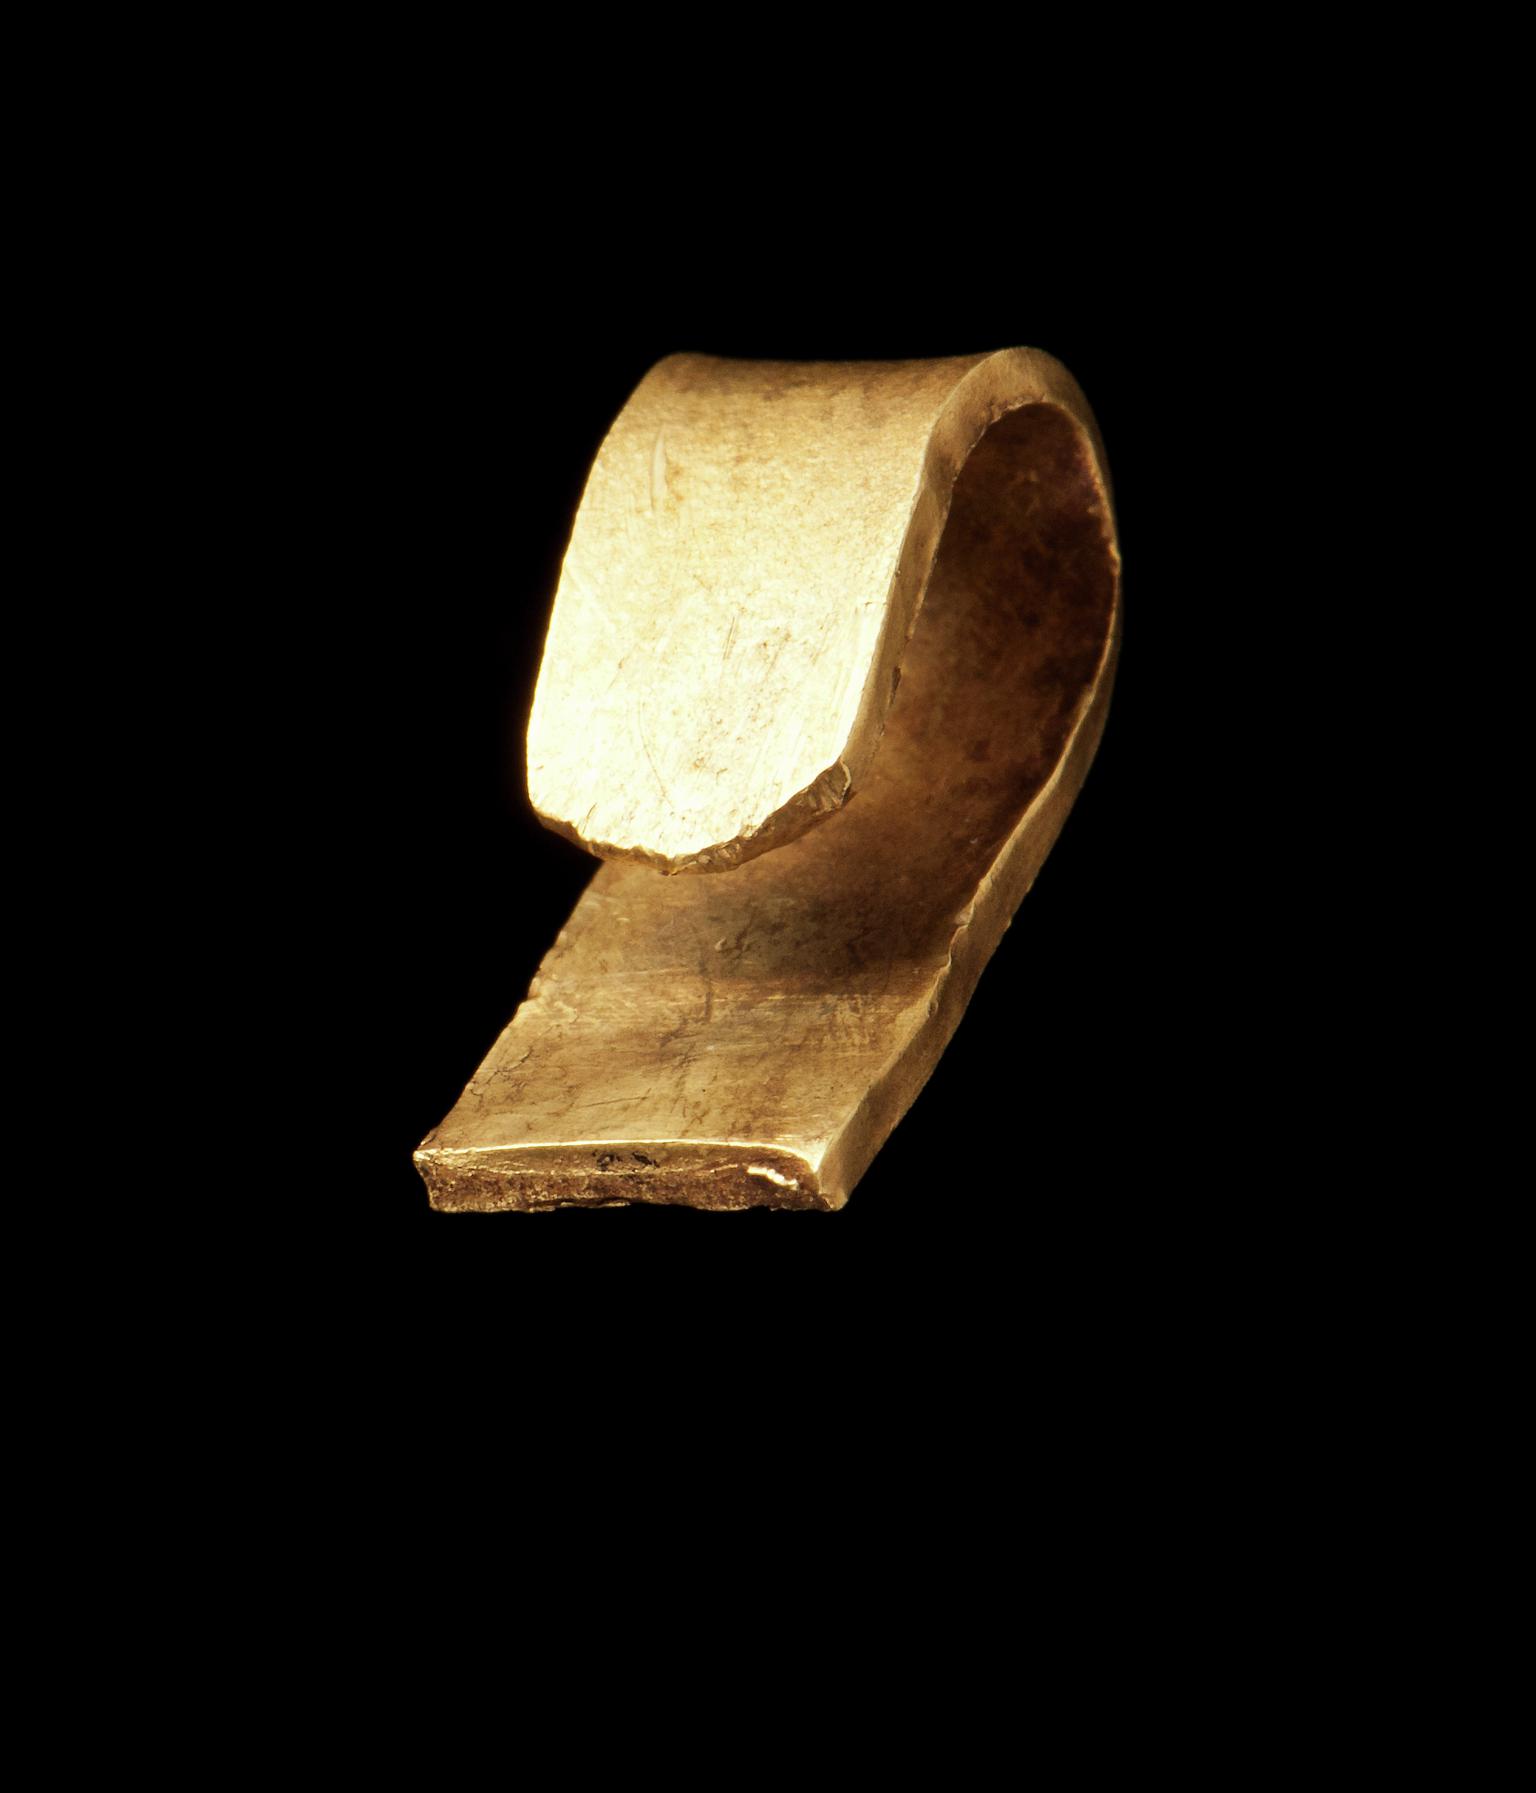 Bronze Age gold jewellery fragment